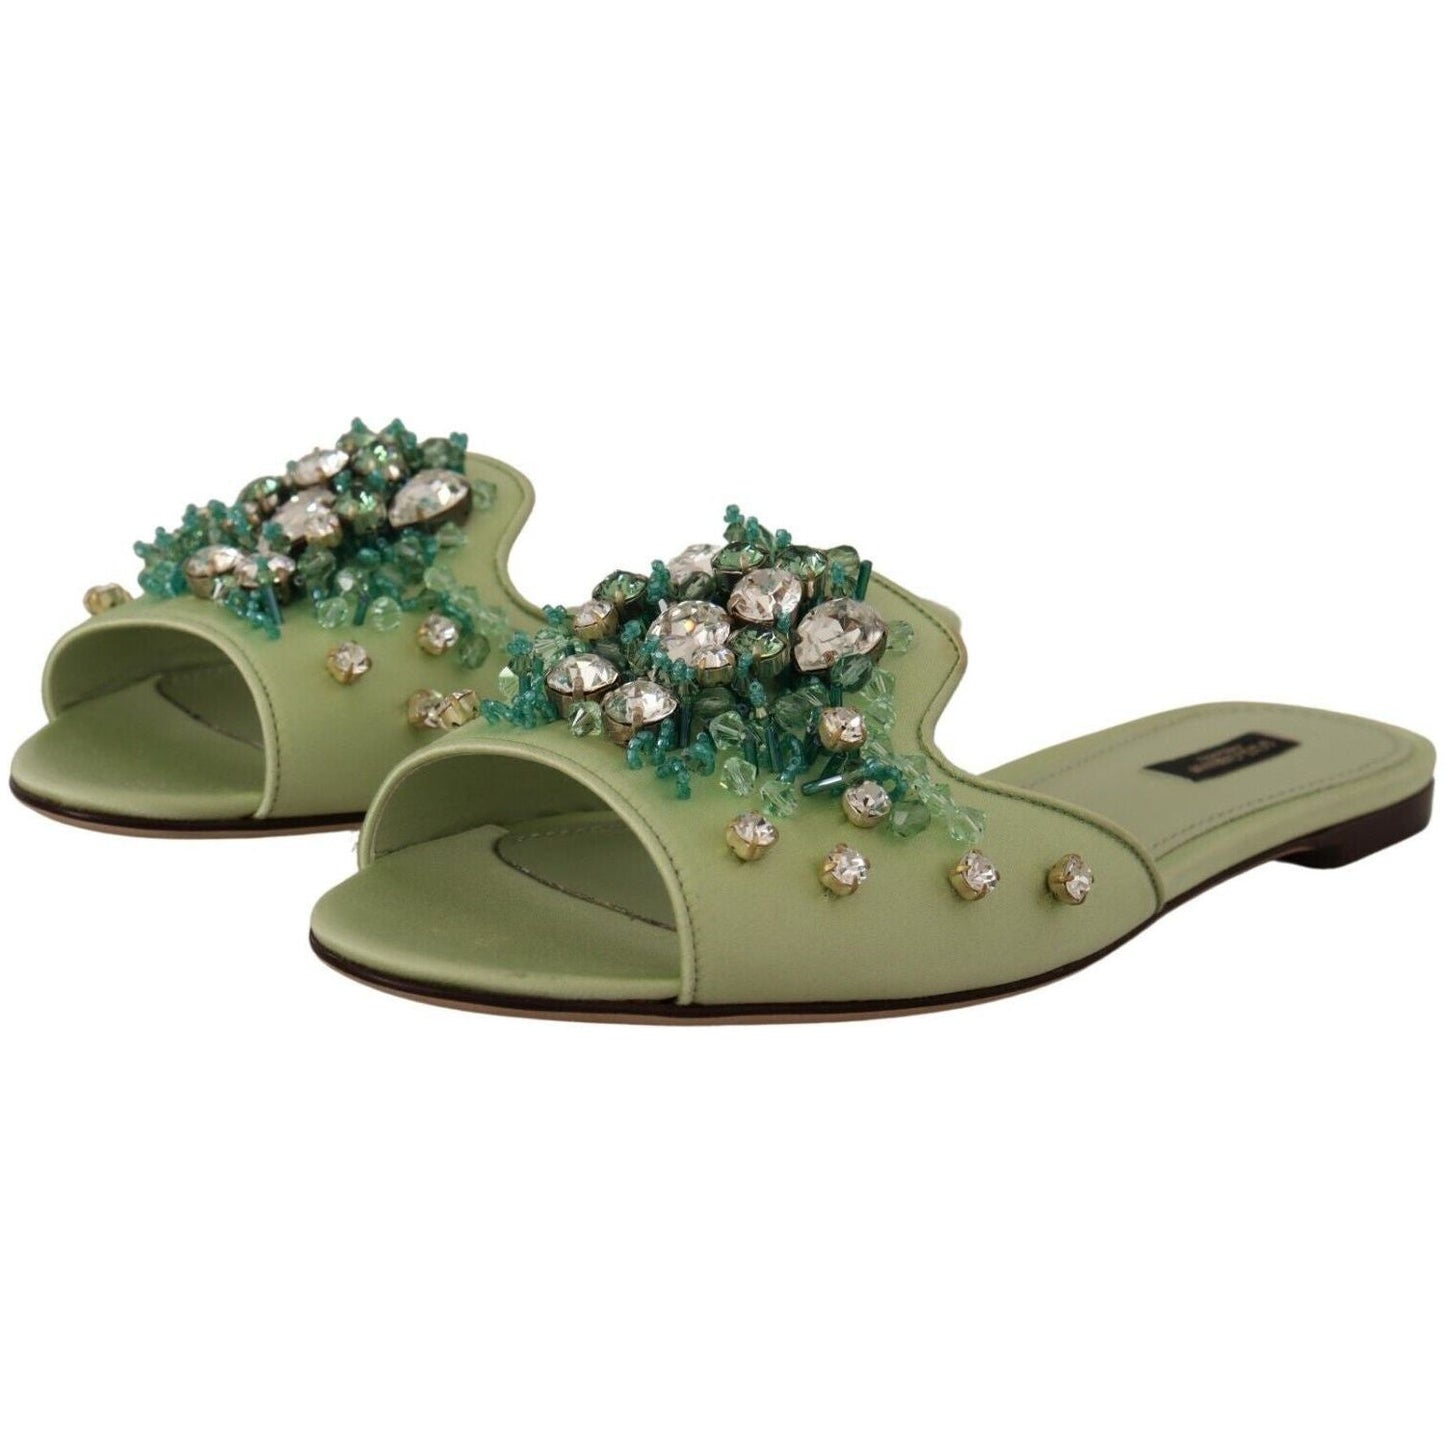 Dolce & Gabbana Elegant Crystal-Embellished Green Leather Slides green-leather-crystals-slides-women-flats-shoes s-l1600-198-e829a8e3-6f5_ea6ba7cb-80f6-496f-9e91-c0b57da7f7aa.jpg